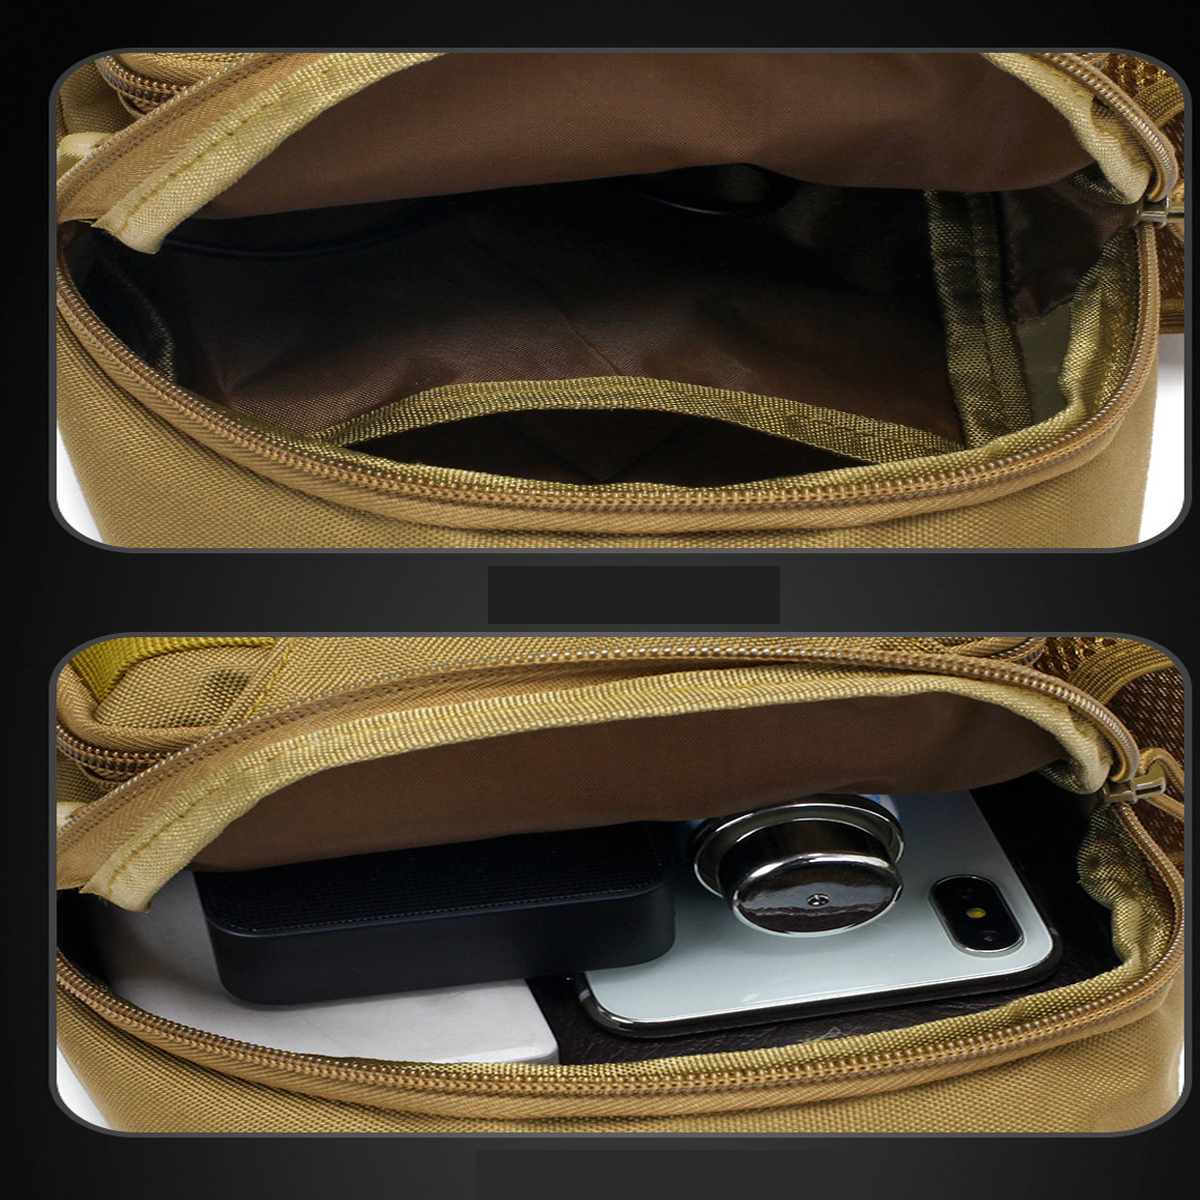 Oxford-Cloth-Tactical-Bag-USB-Charging-Chest-Bag-Climbing-Hiking-Shoulder-Bag-1612919-4